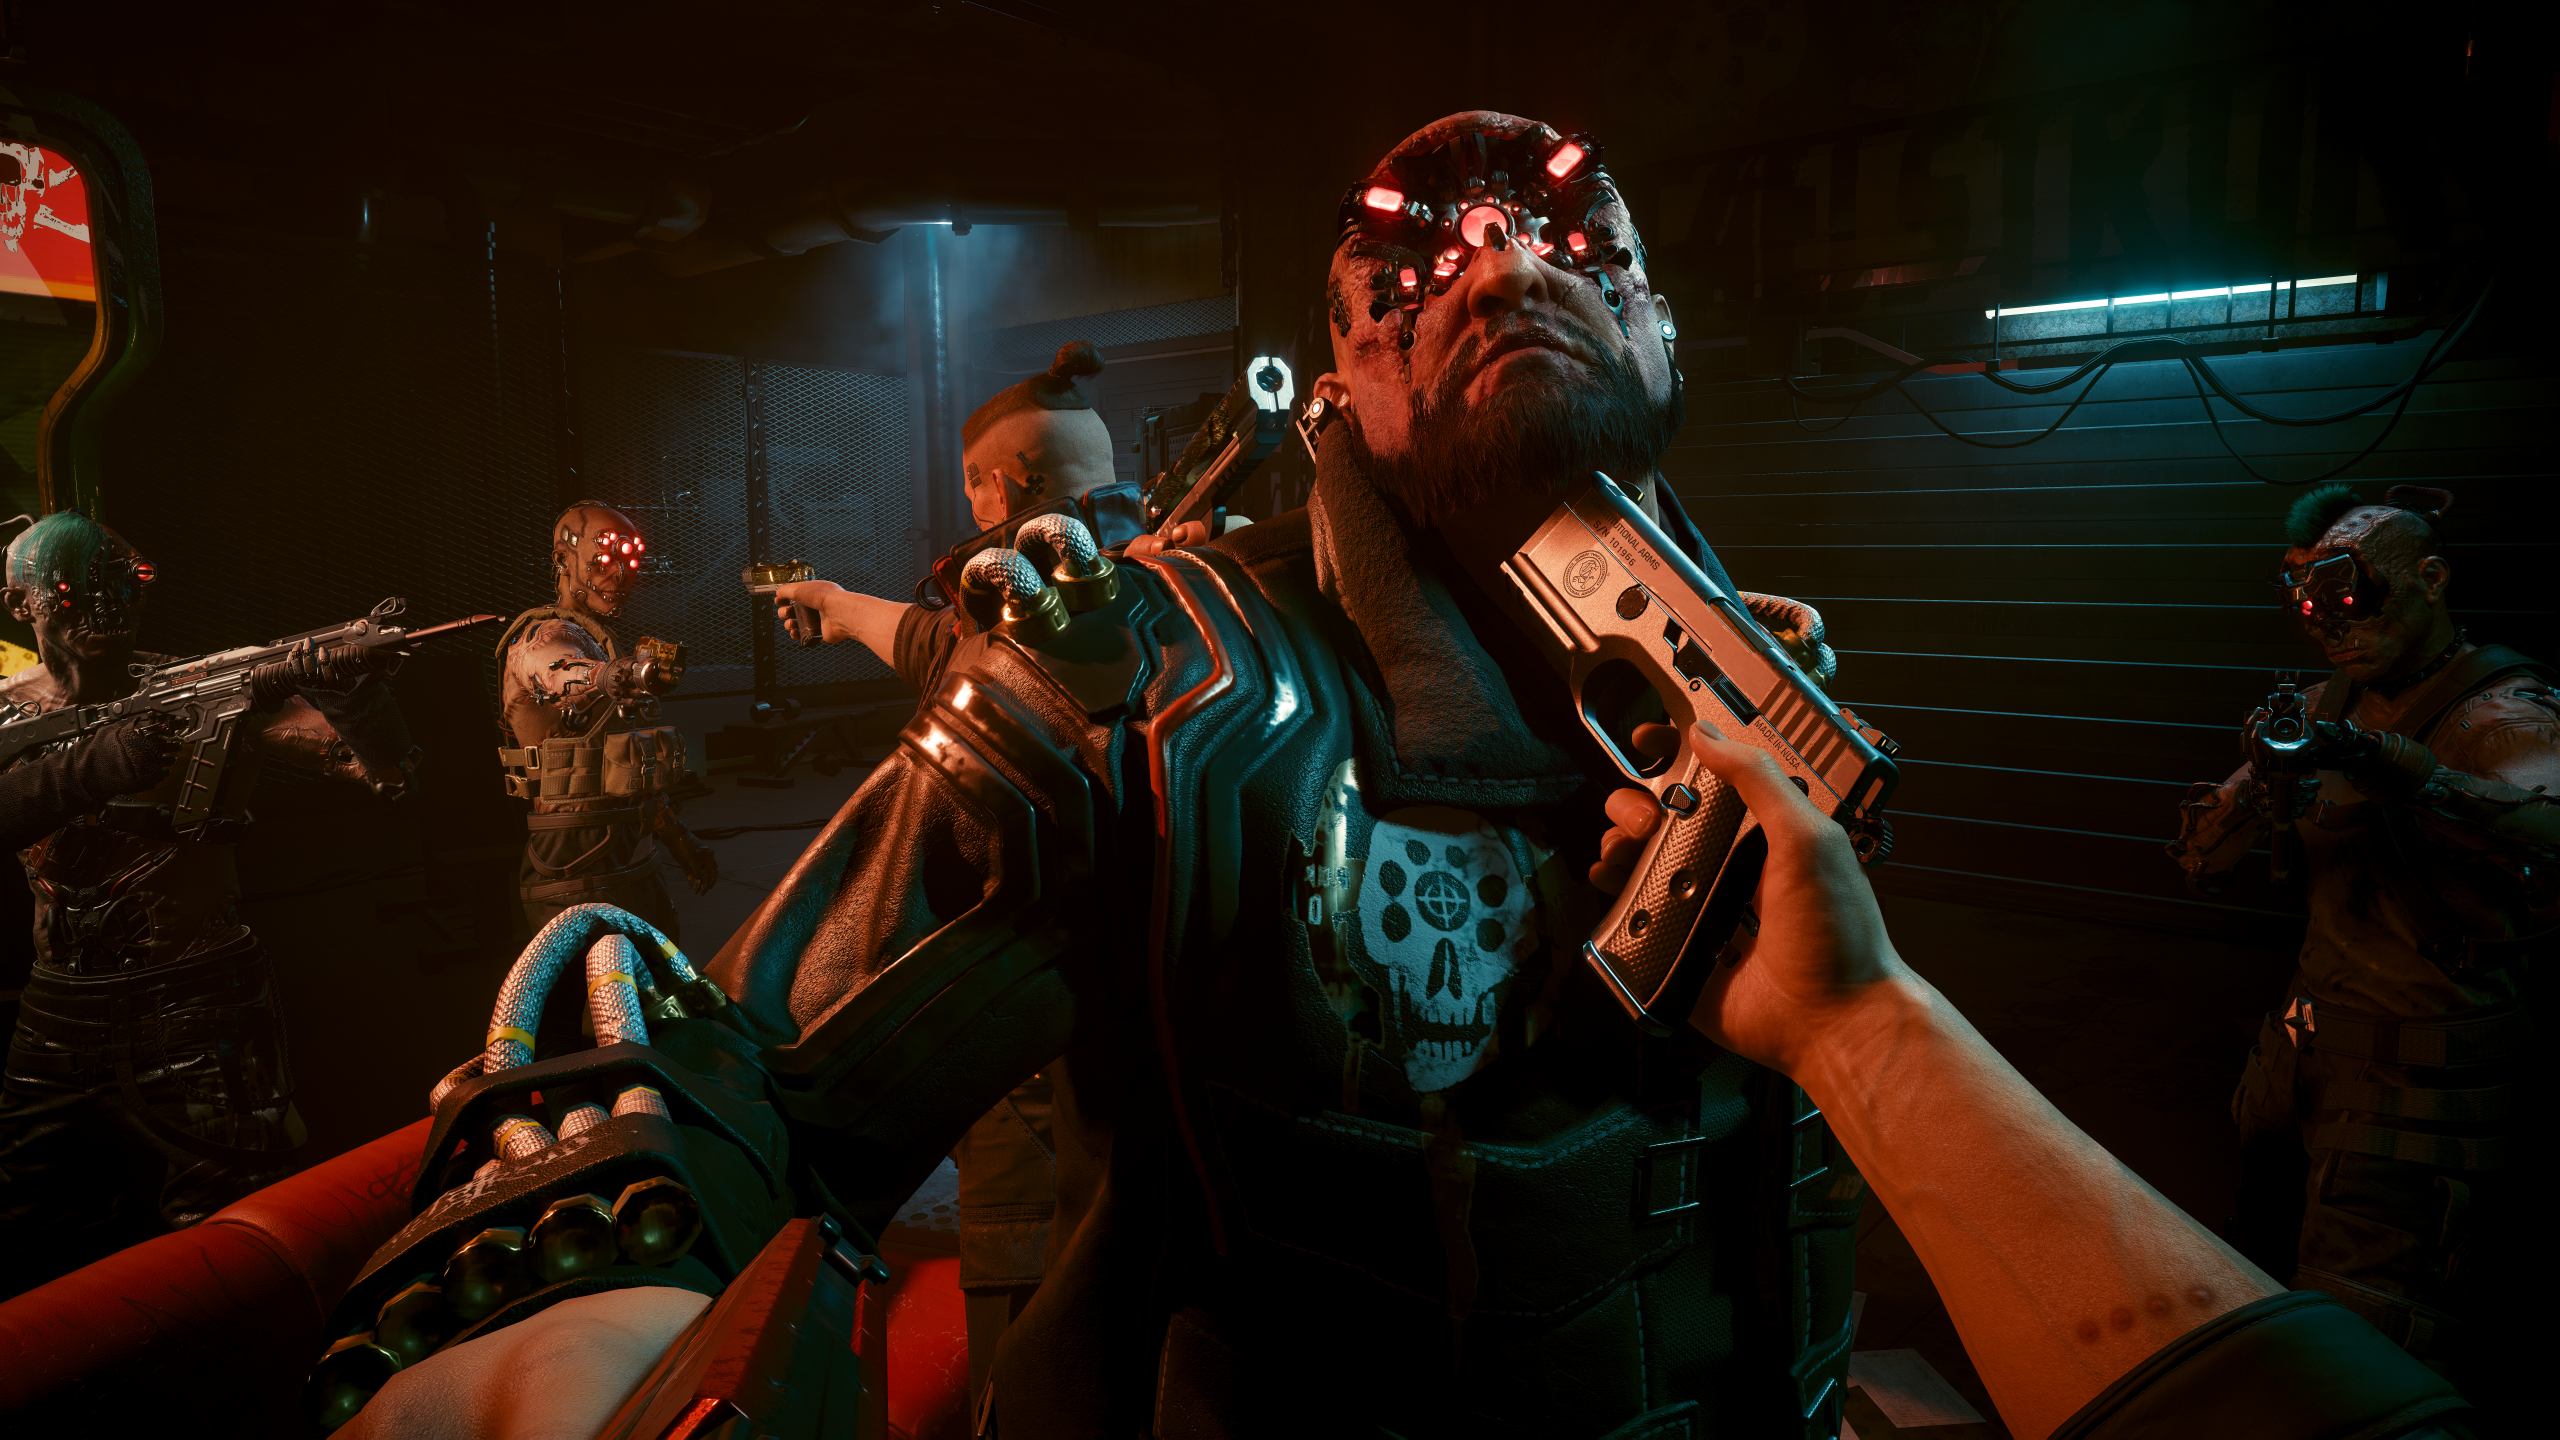 General 2560x1440 Cyberpunk 2077 Nvidia RTX video games beard video game art interior gun boys with guns video game characters CGI men aiming